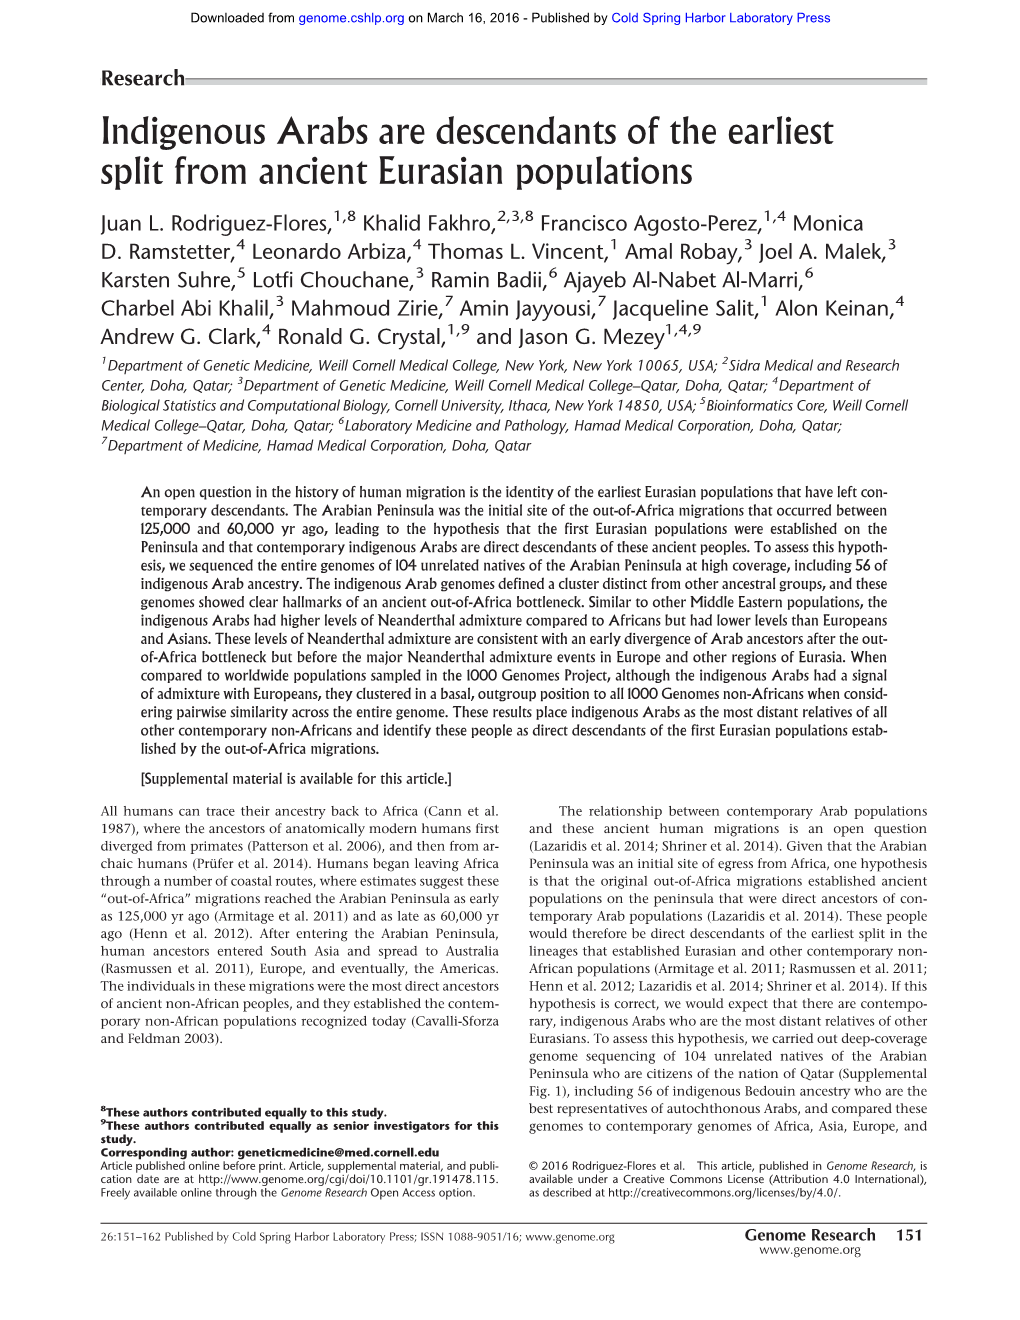 Indigenous Arabs Are Descendants of the Earliest Split from Ancient Eurasian Populations